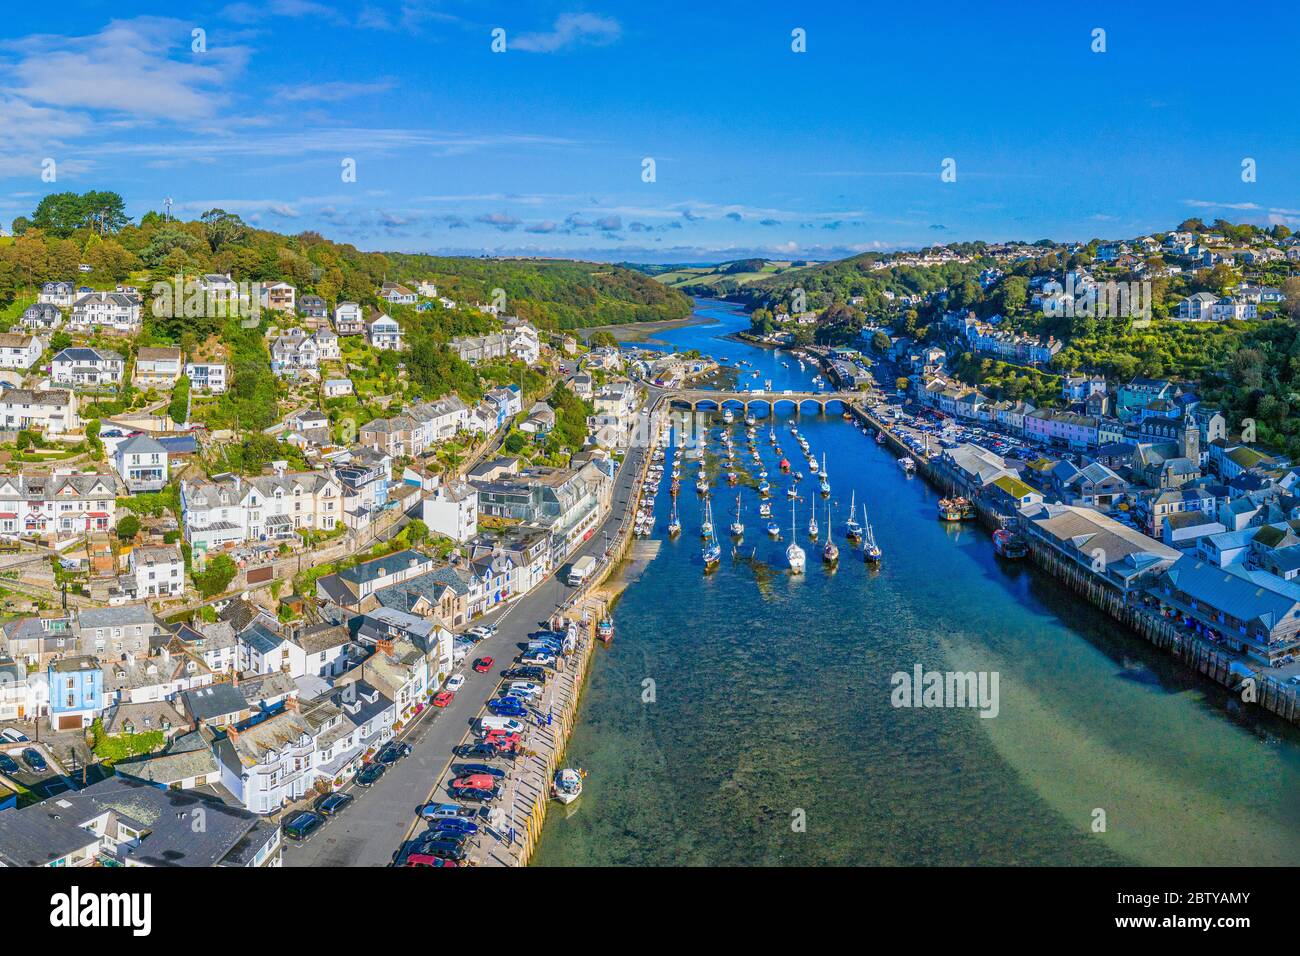 Vista aérea sobre Looe, ciudad pesquera de Cornualles, Cornualles, Inglaterra, Reino Unido, Europa Foto de stock